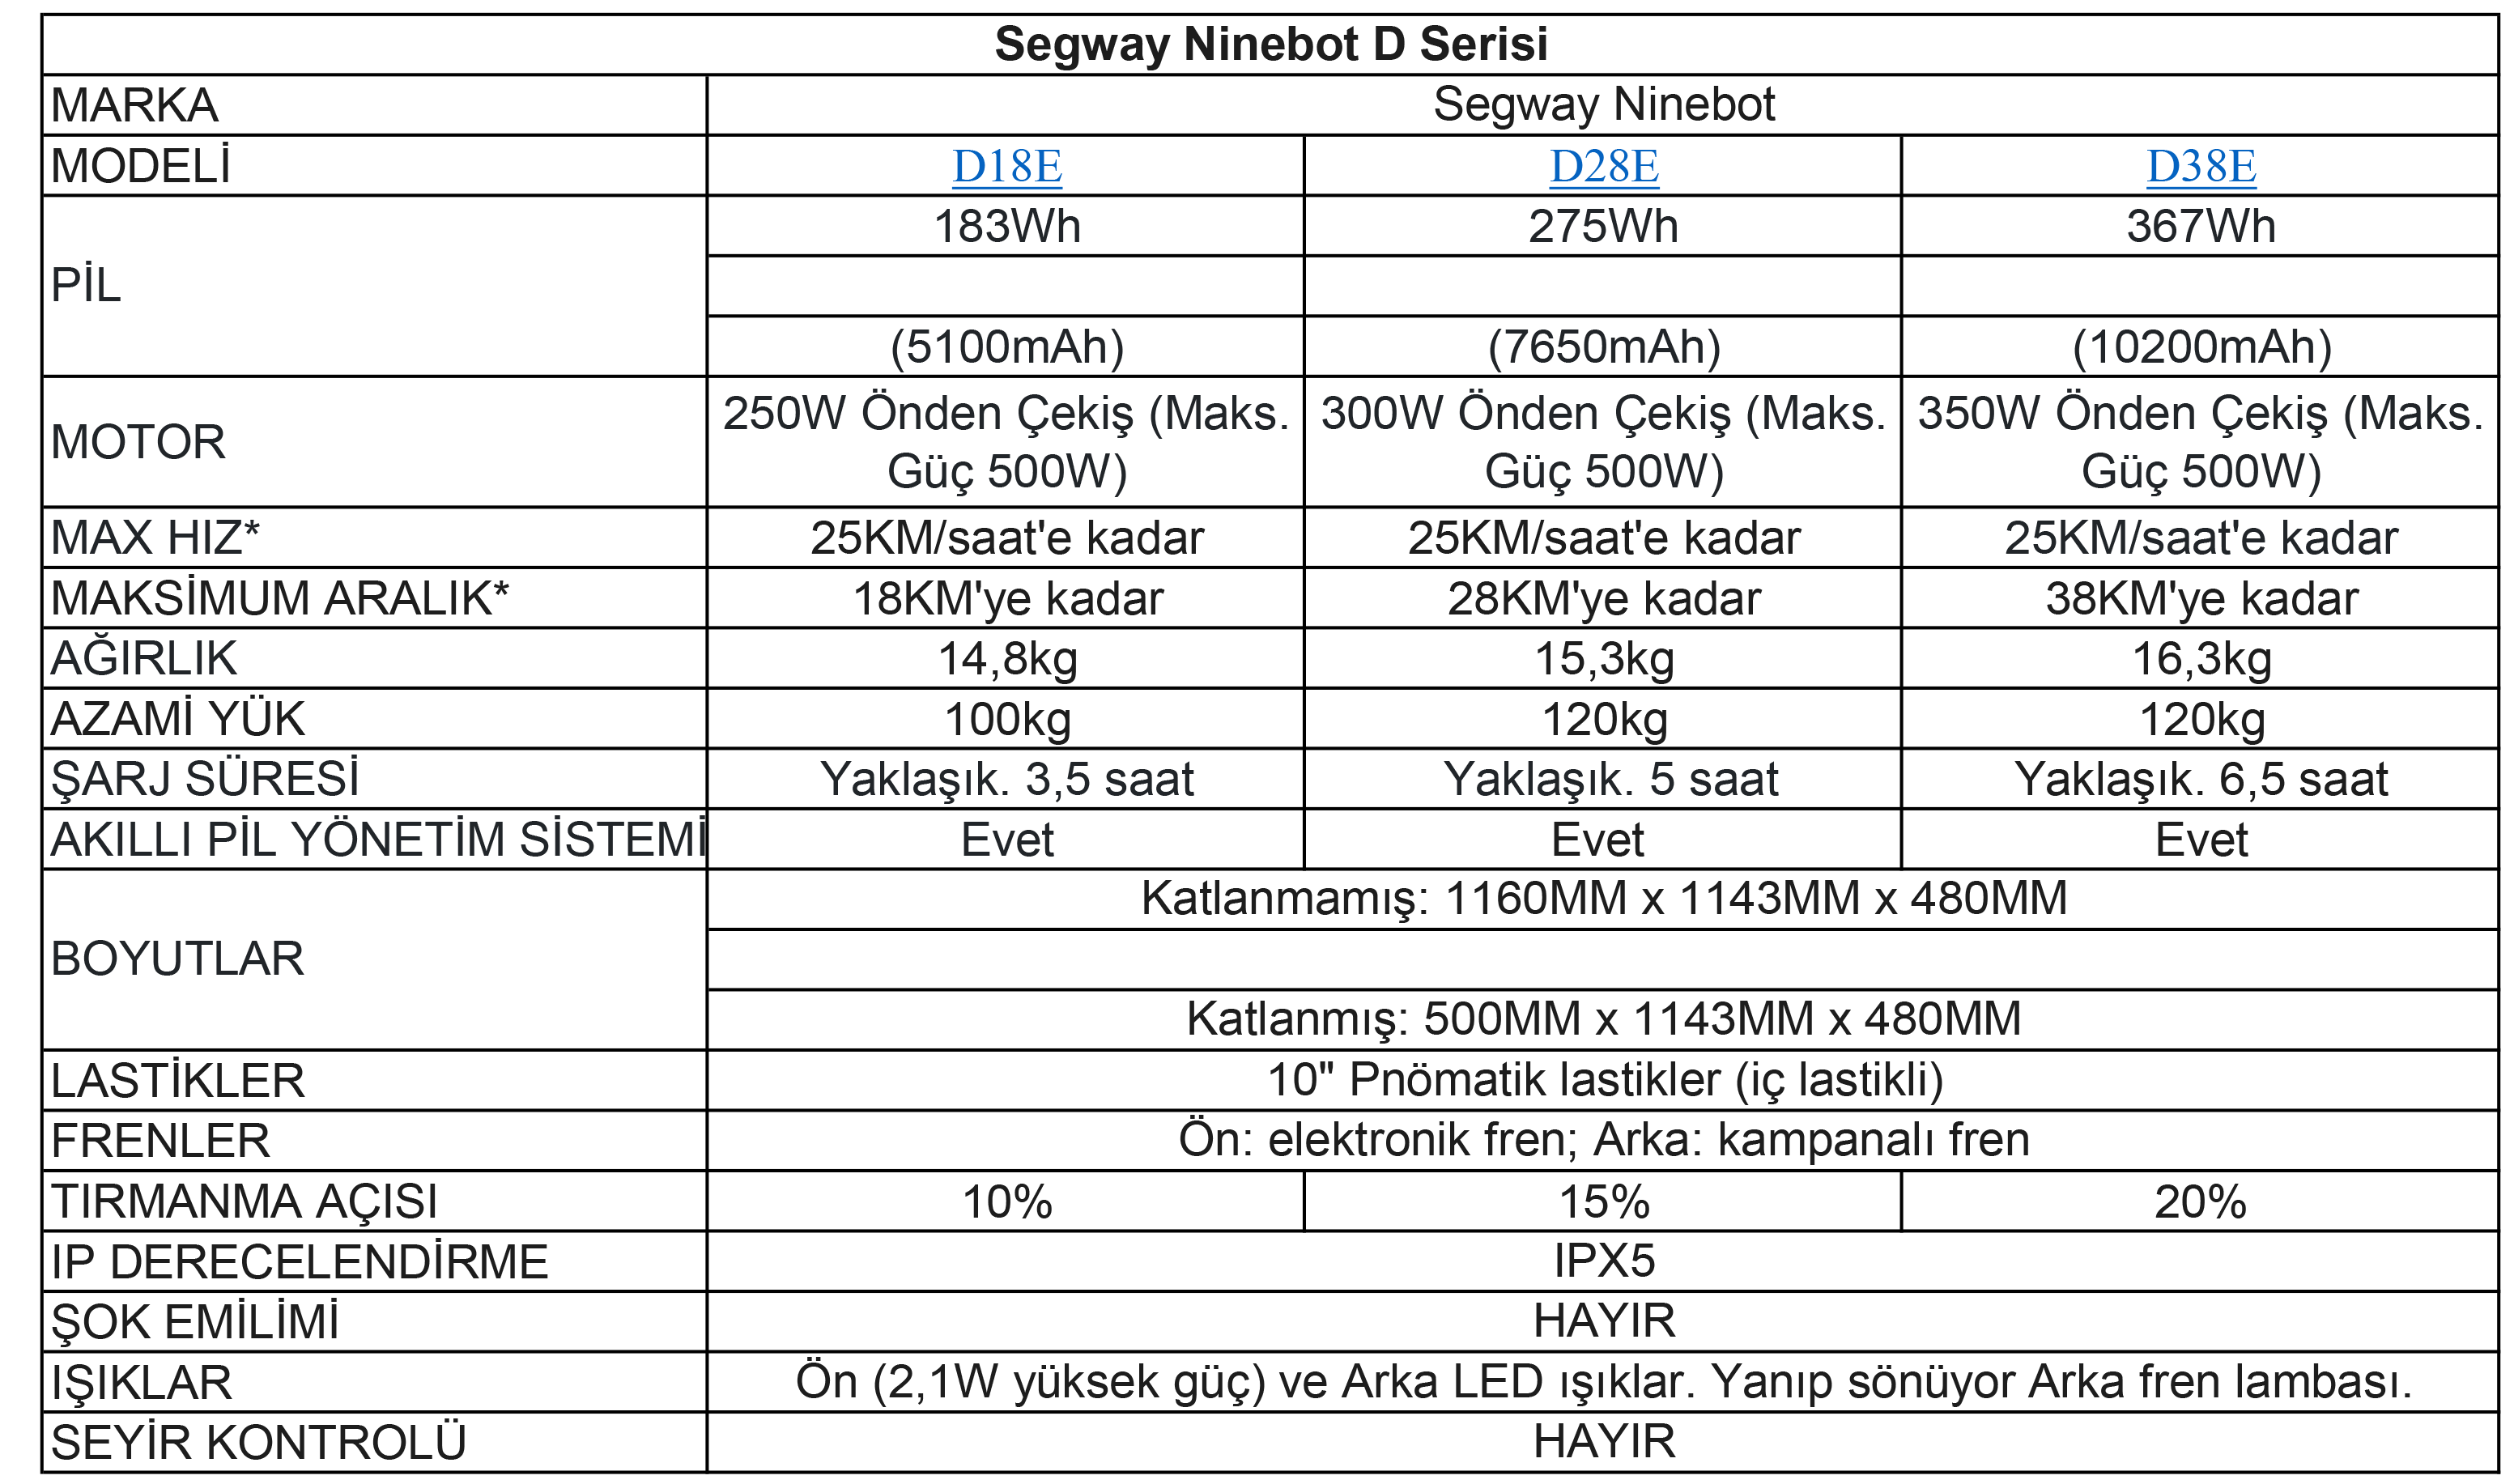 Segway-ninebot D Serisi karşılaştırma tablosu (2)